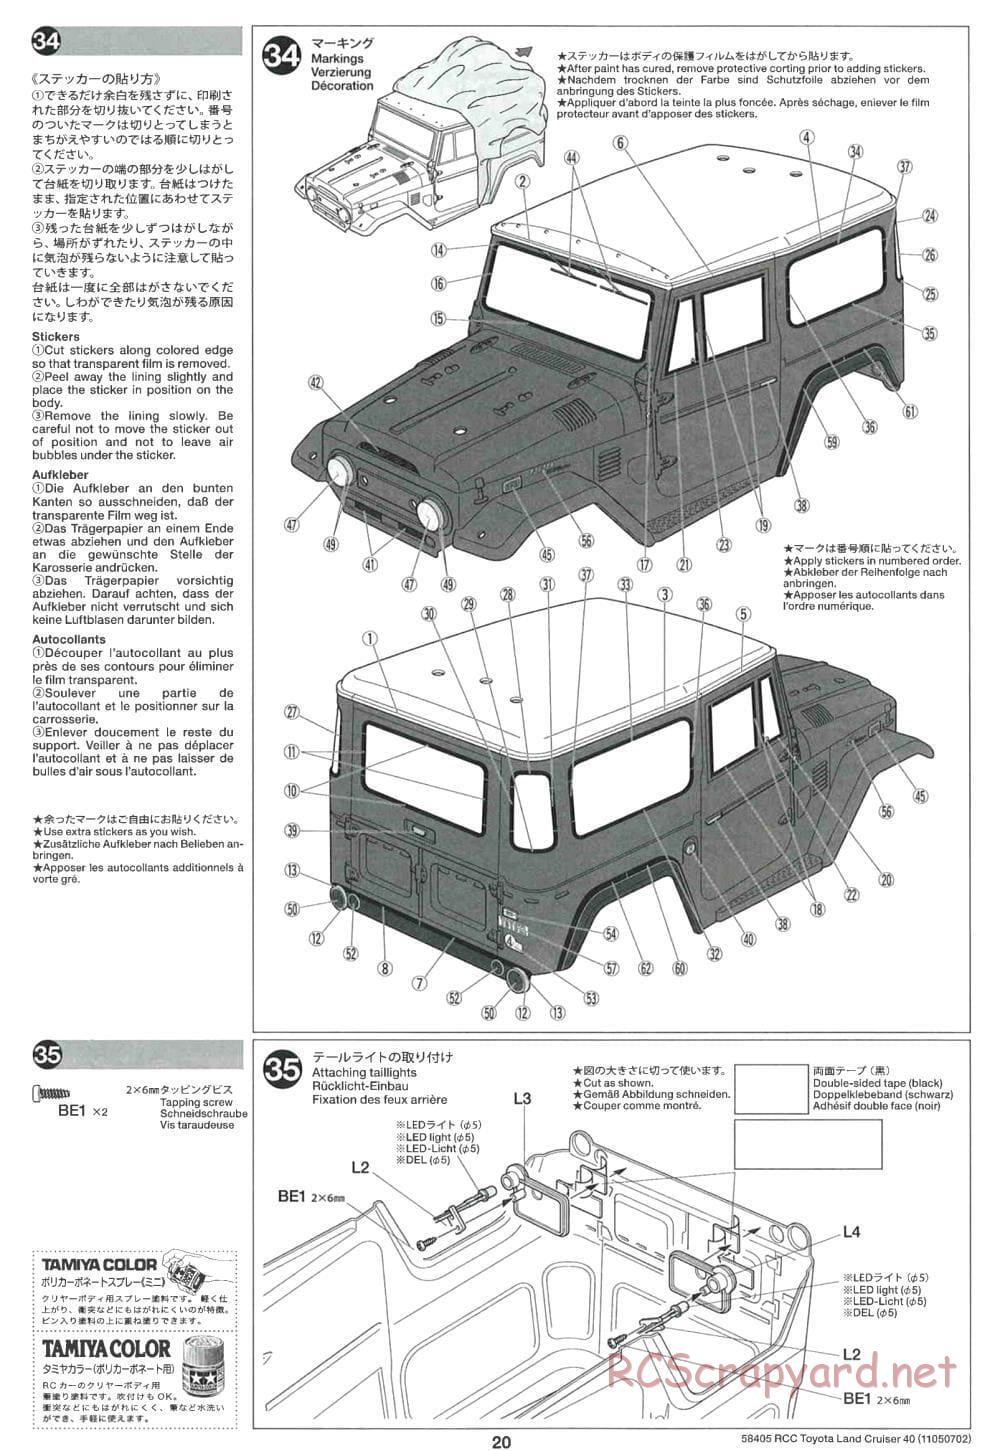 Tamiya - Toyota Land Cruiser 40 - CR-01 Chassis - Manual - Page 20